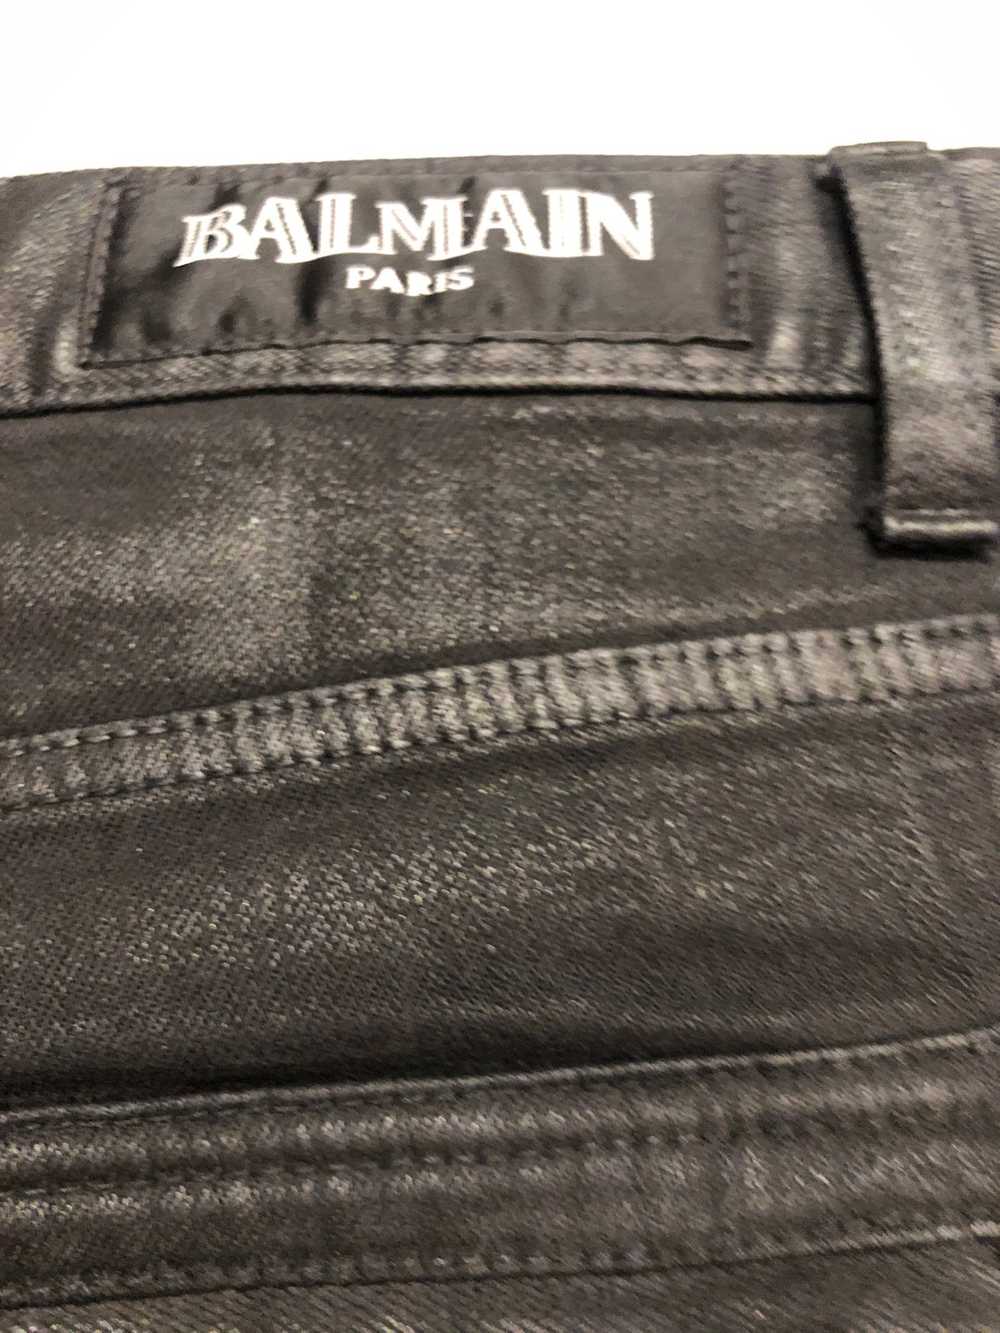 Balmain × Pierre Balmain Balmain Jeans Black - image 5